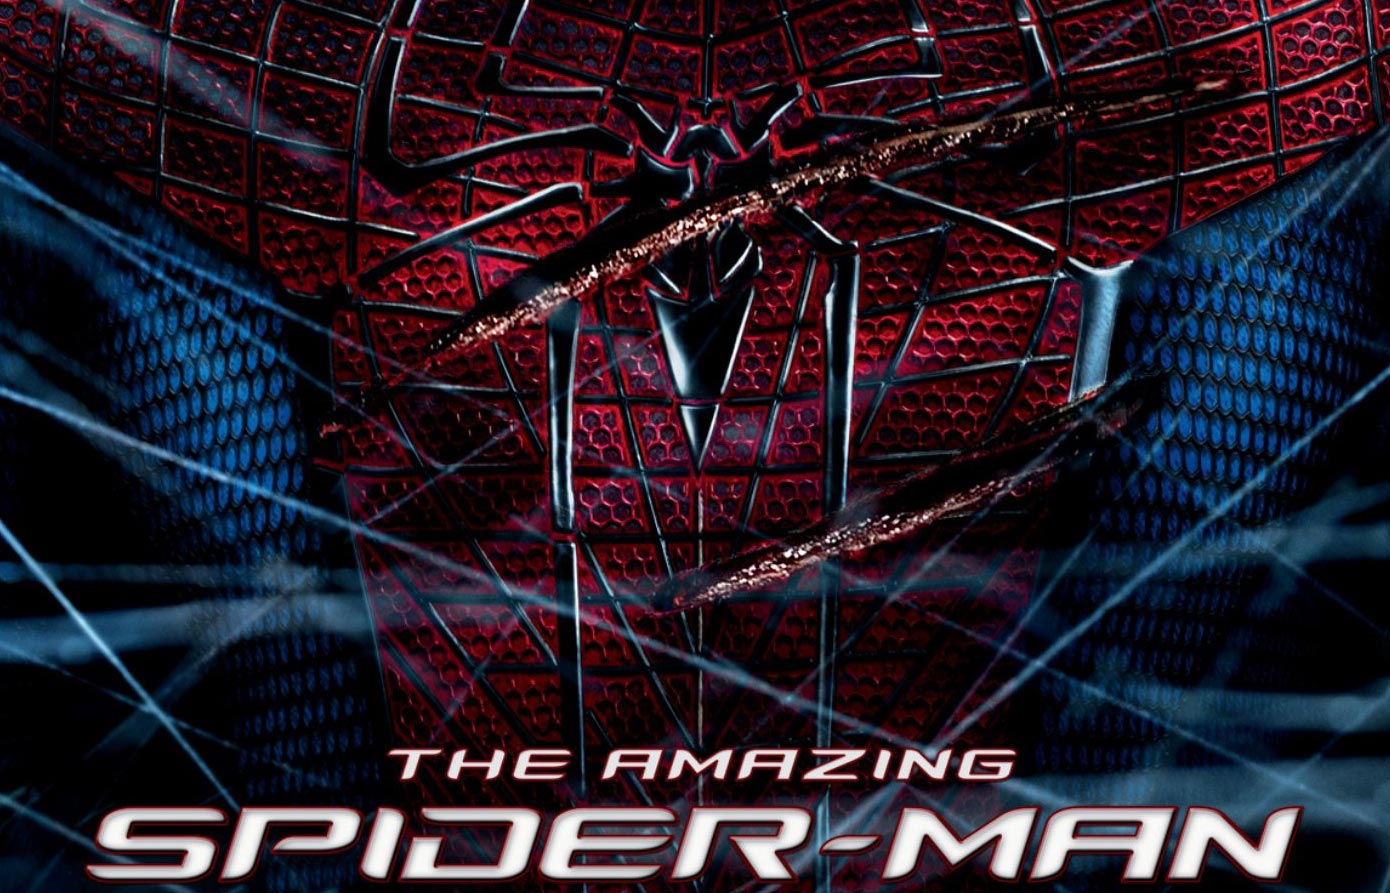 http://2.bp.blogspot.com/-7byqf2pvJI8/T9_hpTkTixI/AAAAAAAAFIM/dUgcLgTGt_k/s1600/the-amazing-spider-man-2012-wallpaper.jpg